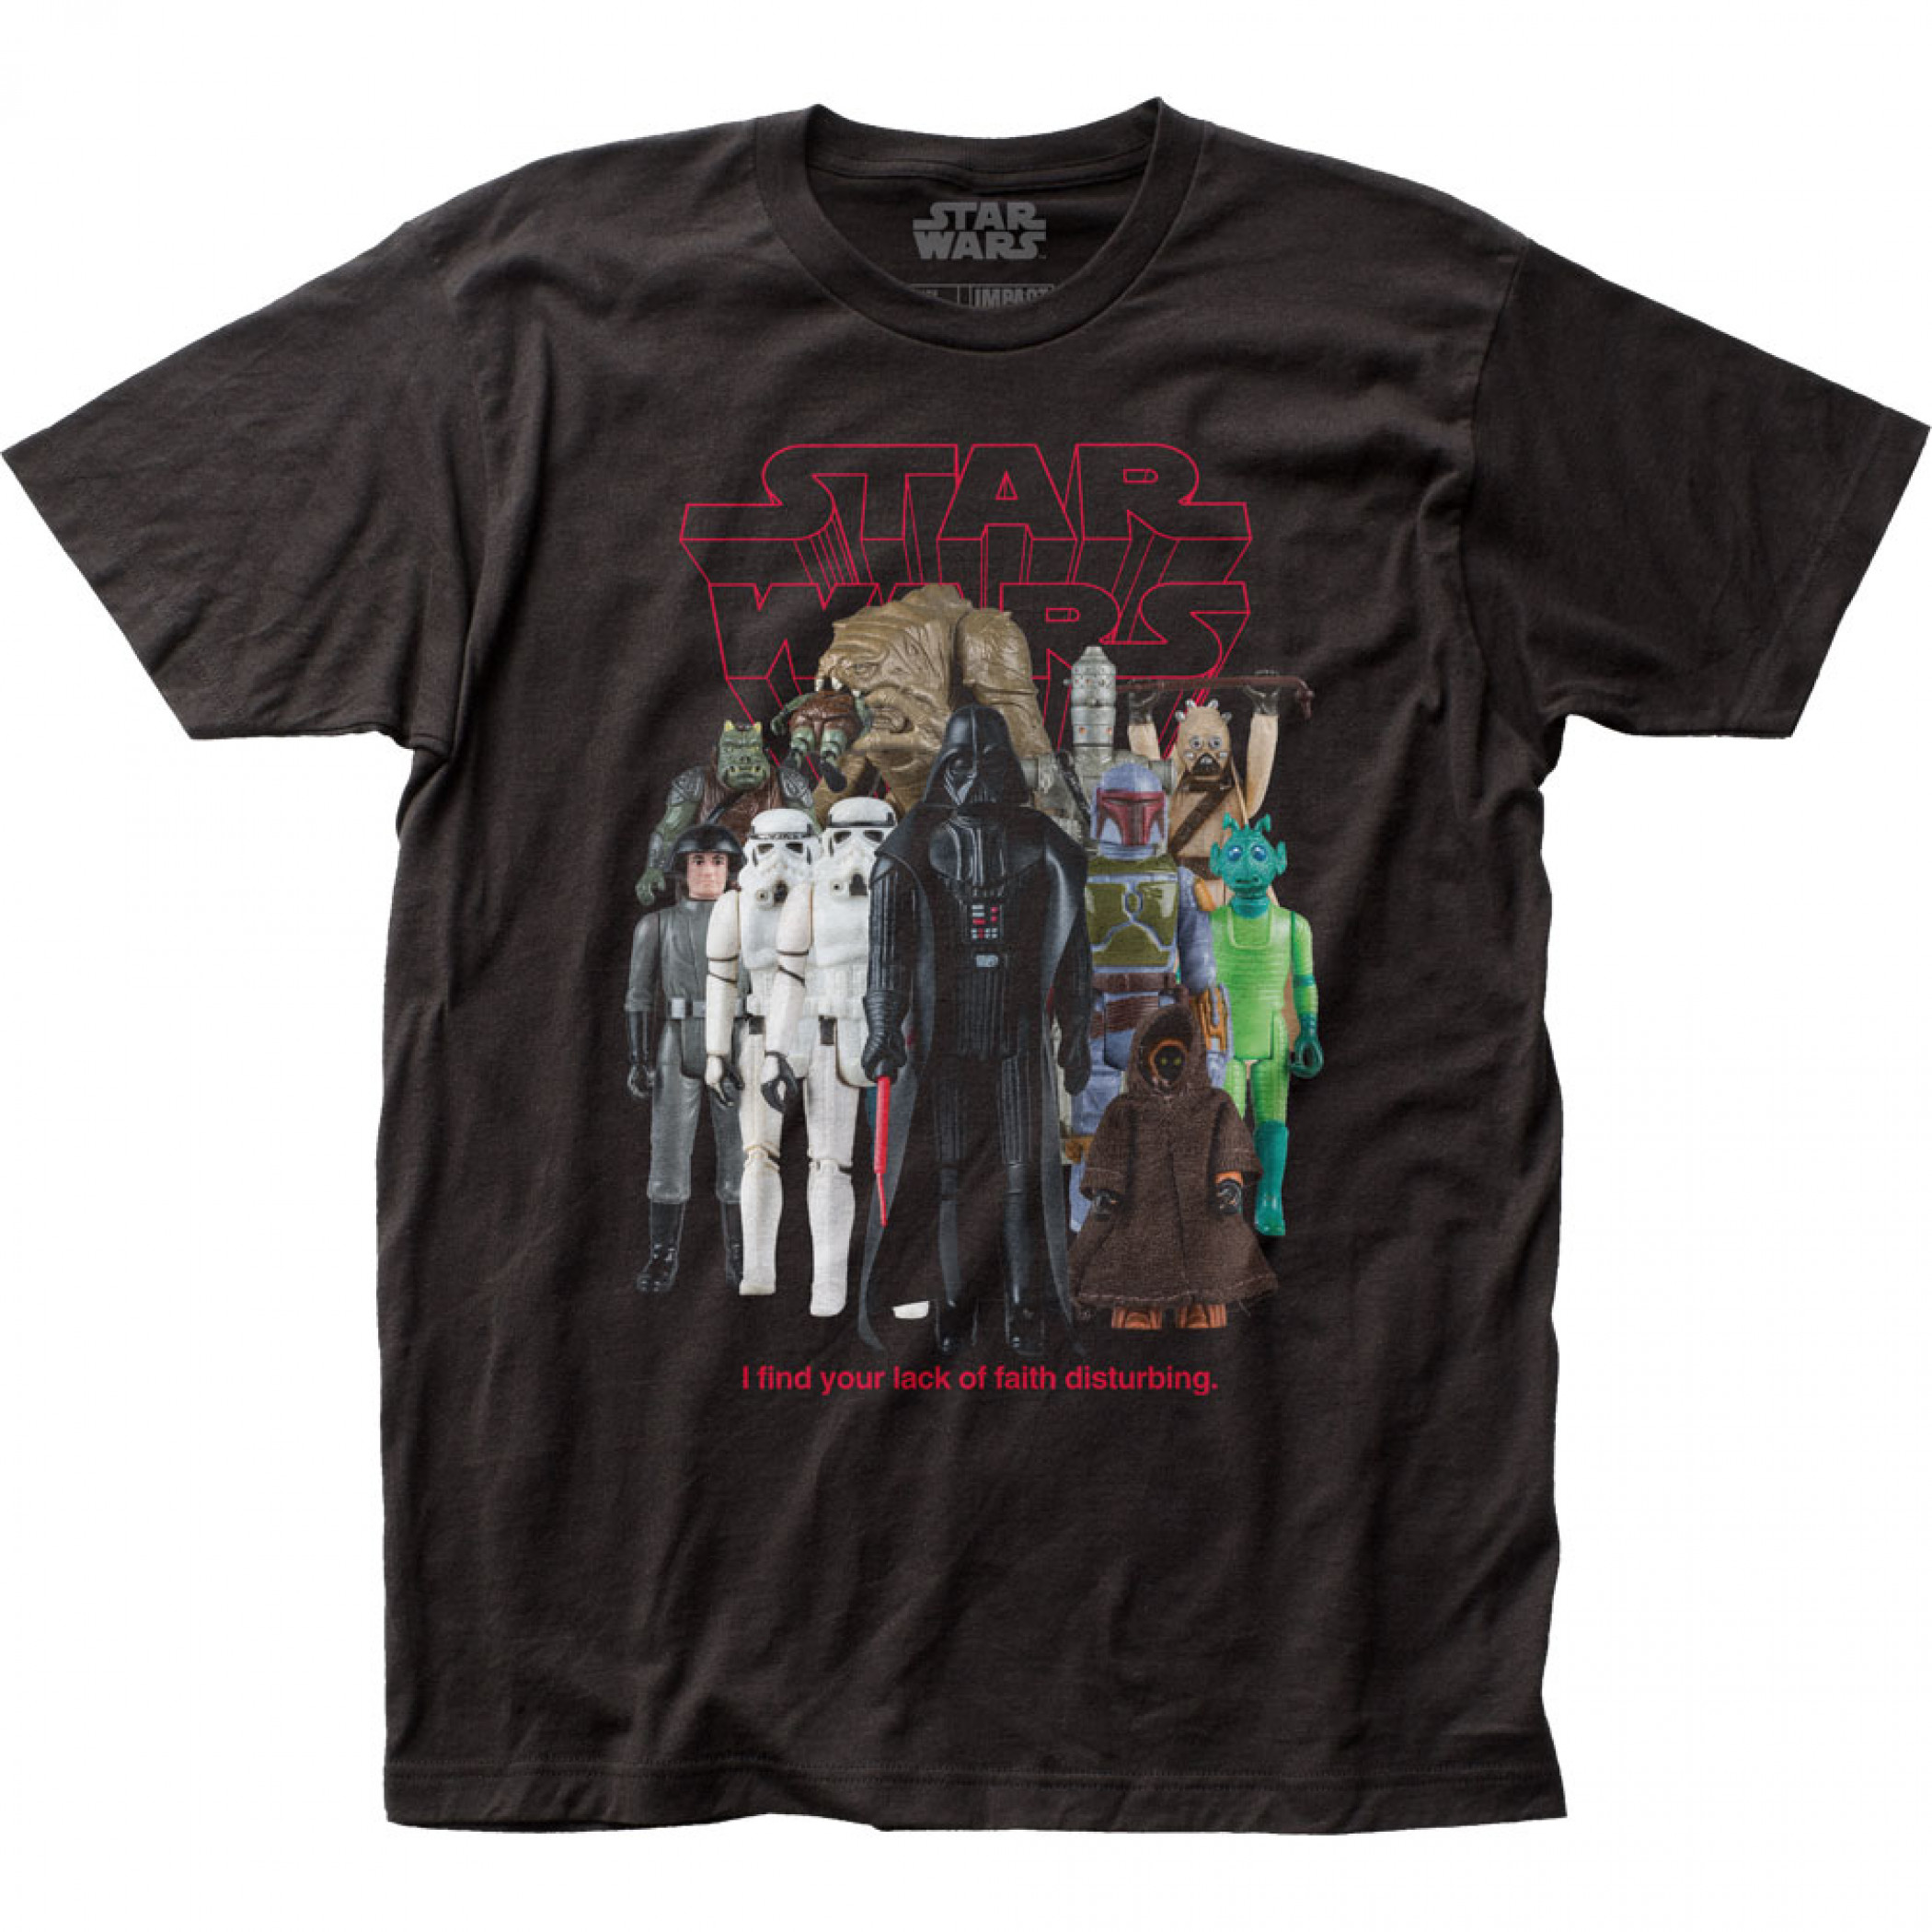 Star Wars Classic Original Trilogy Bad Guys Action Figures T-Shirt